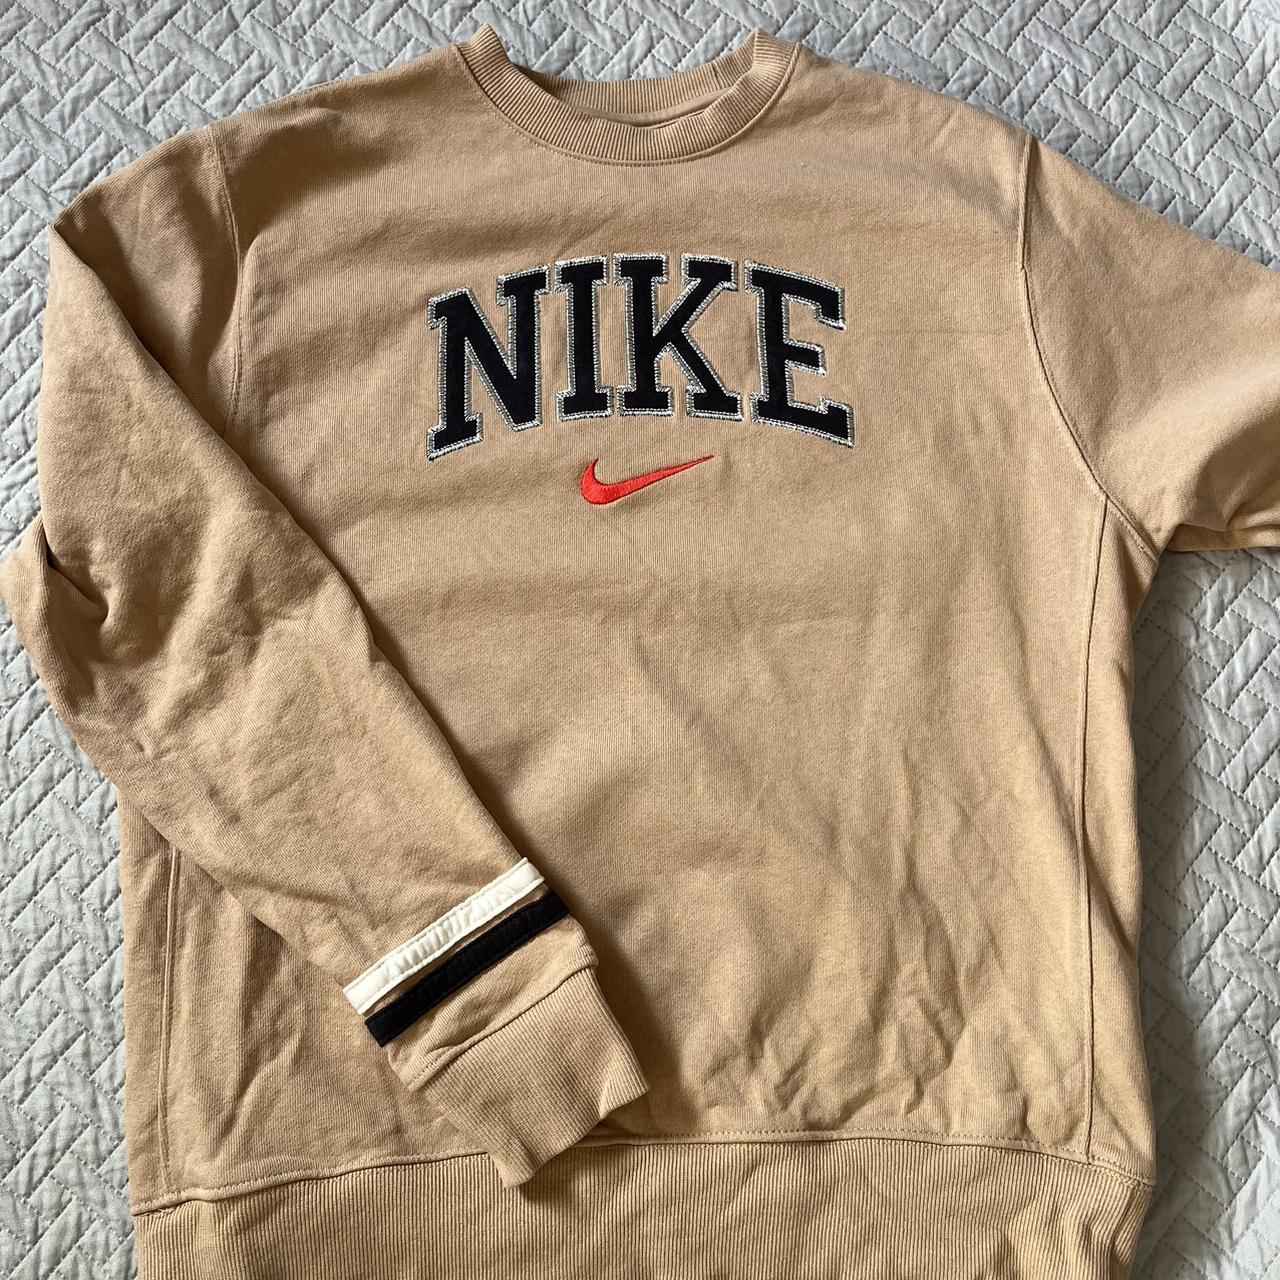 Authentic Vintage Nike Sweatshirt Like New - Never... - Depop